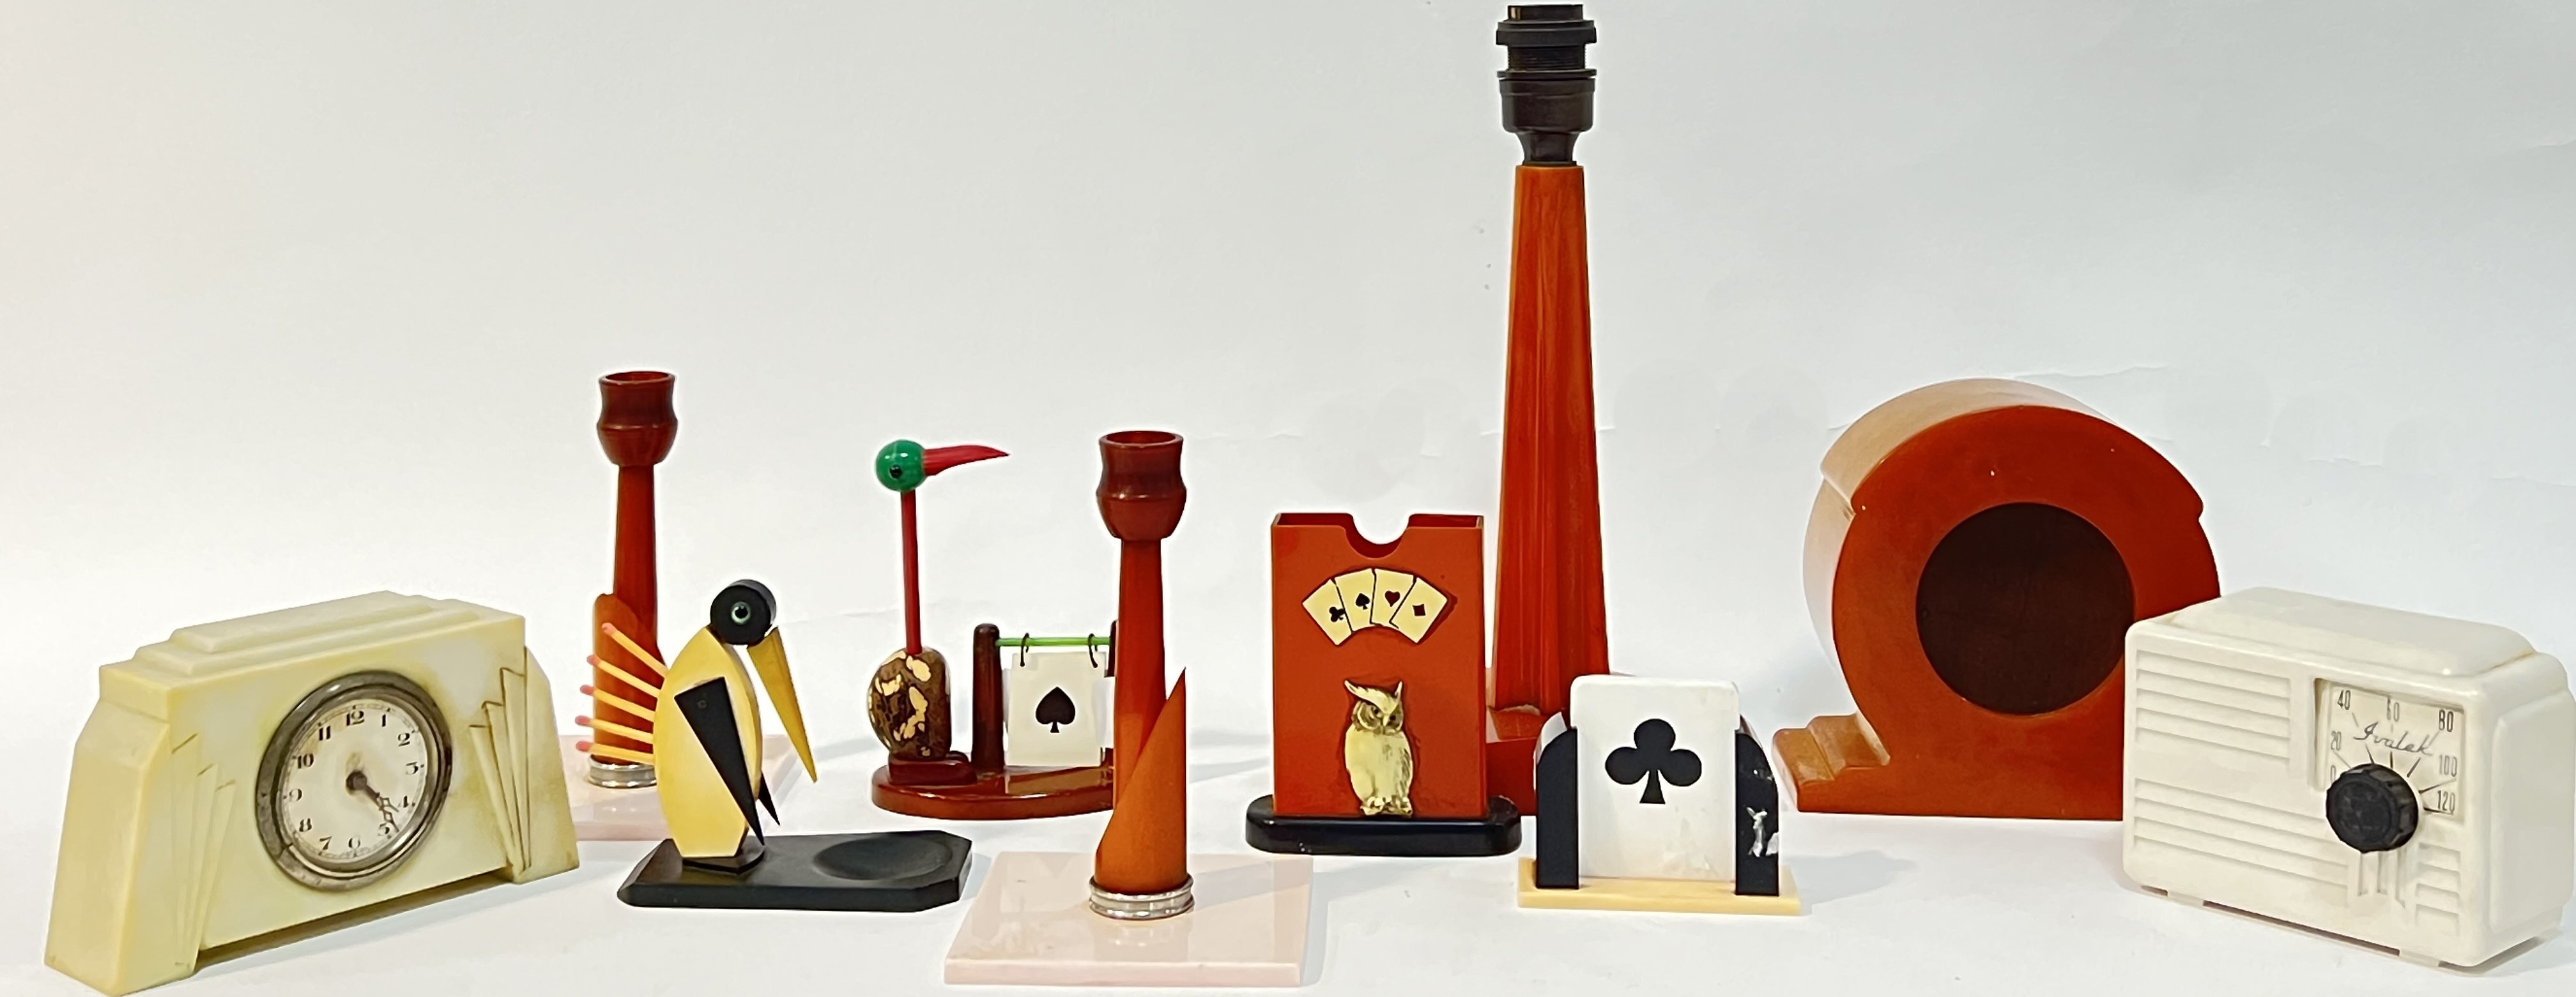 A quantity of bakelite/early plastic objects comprising two bridge trump suit indicators, a deck